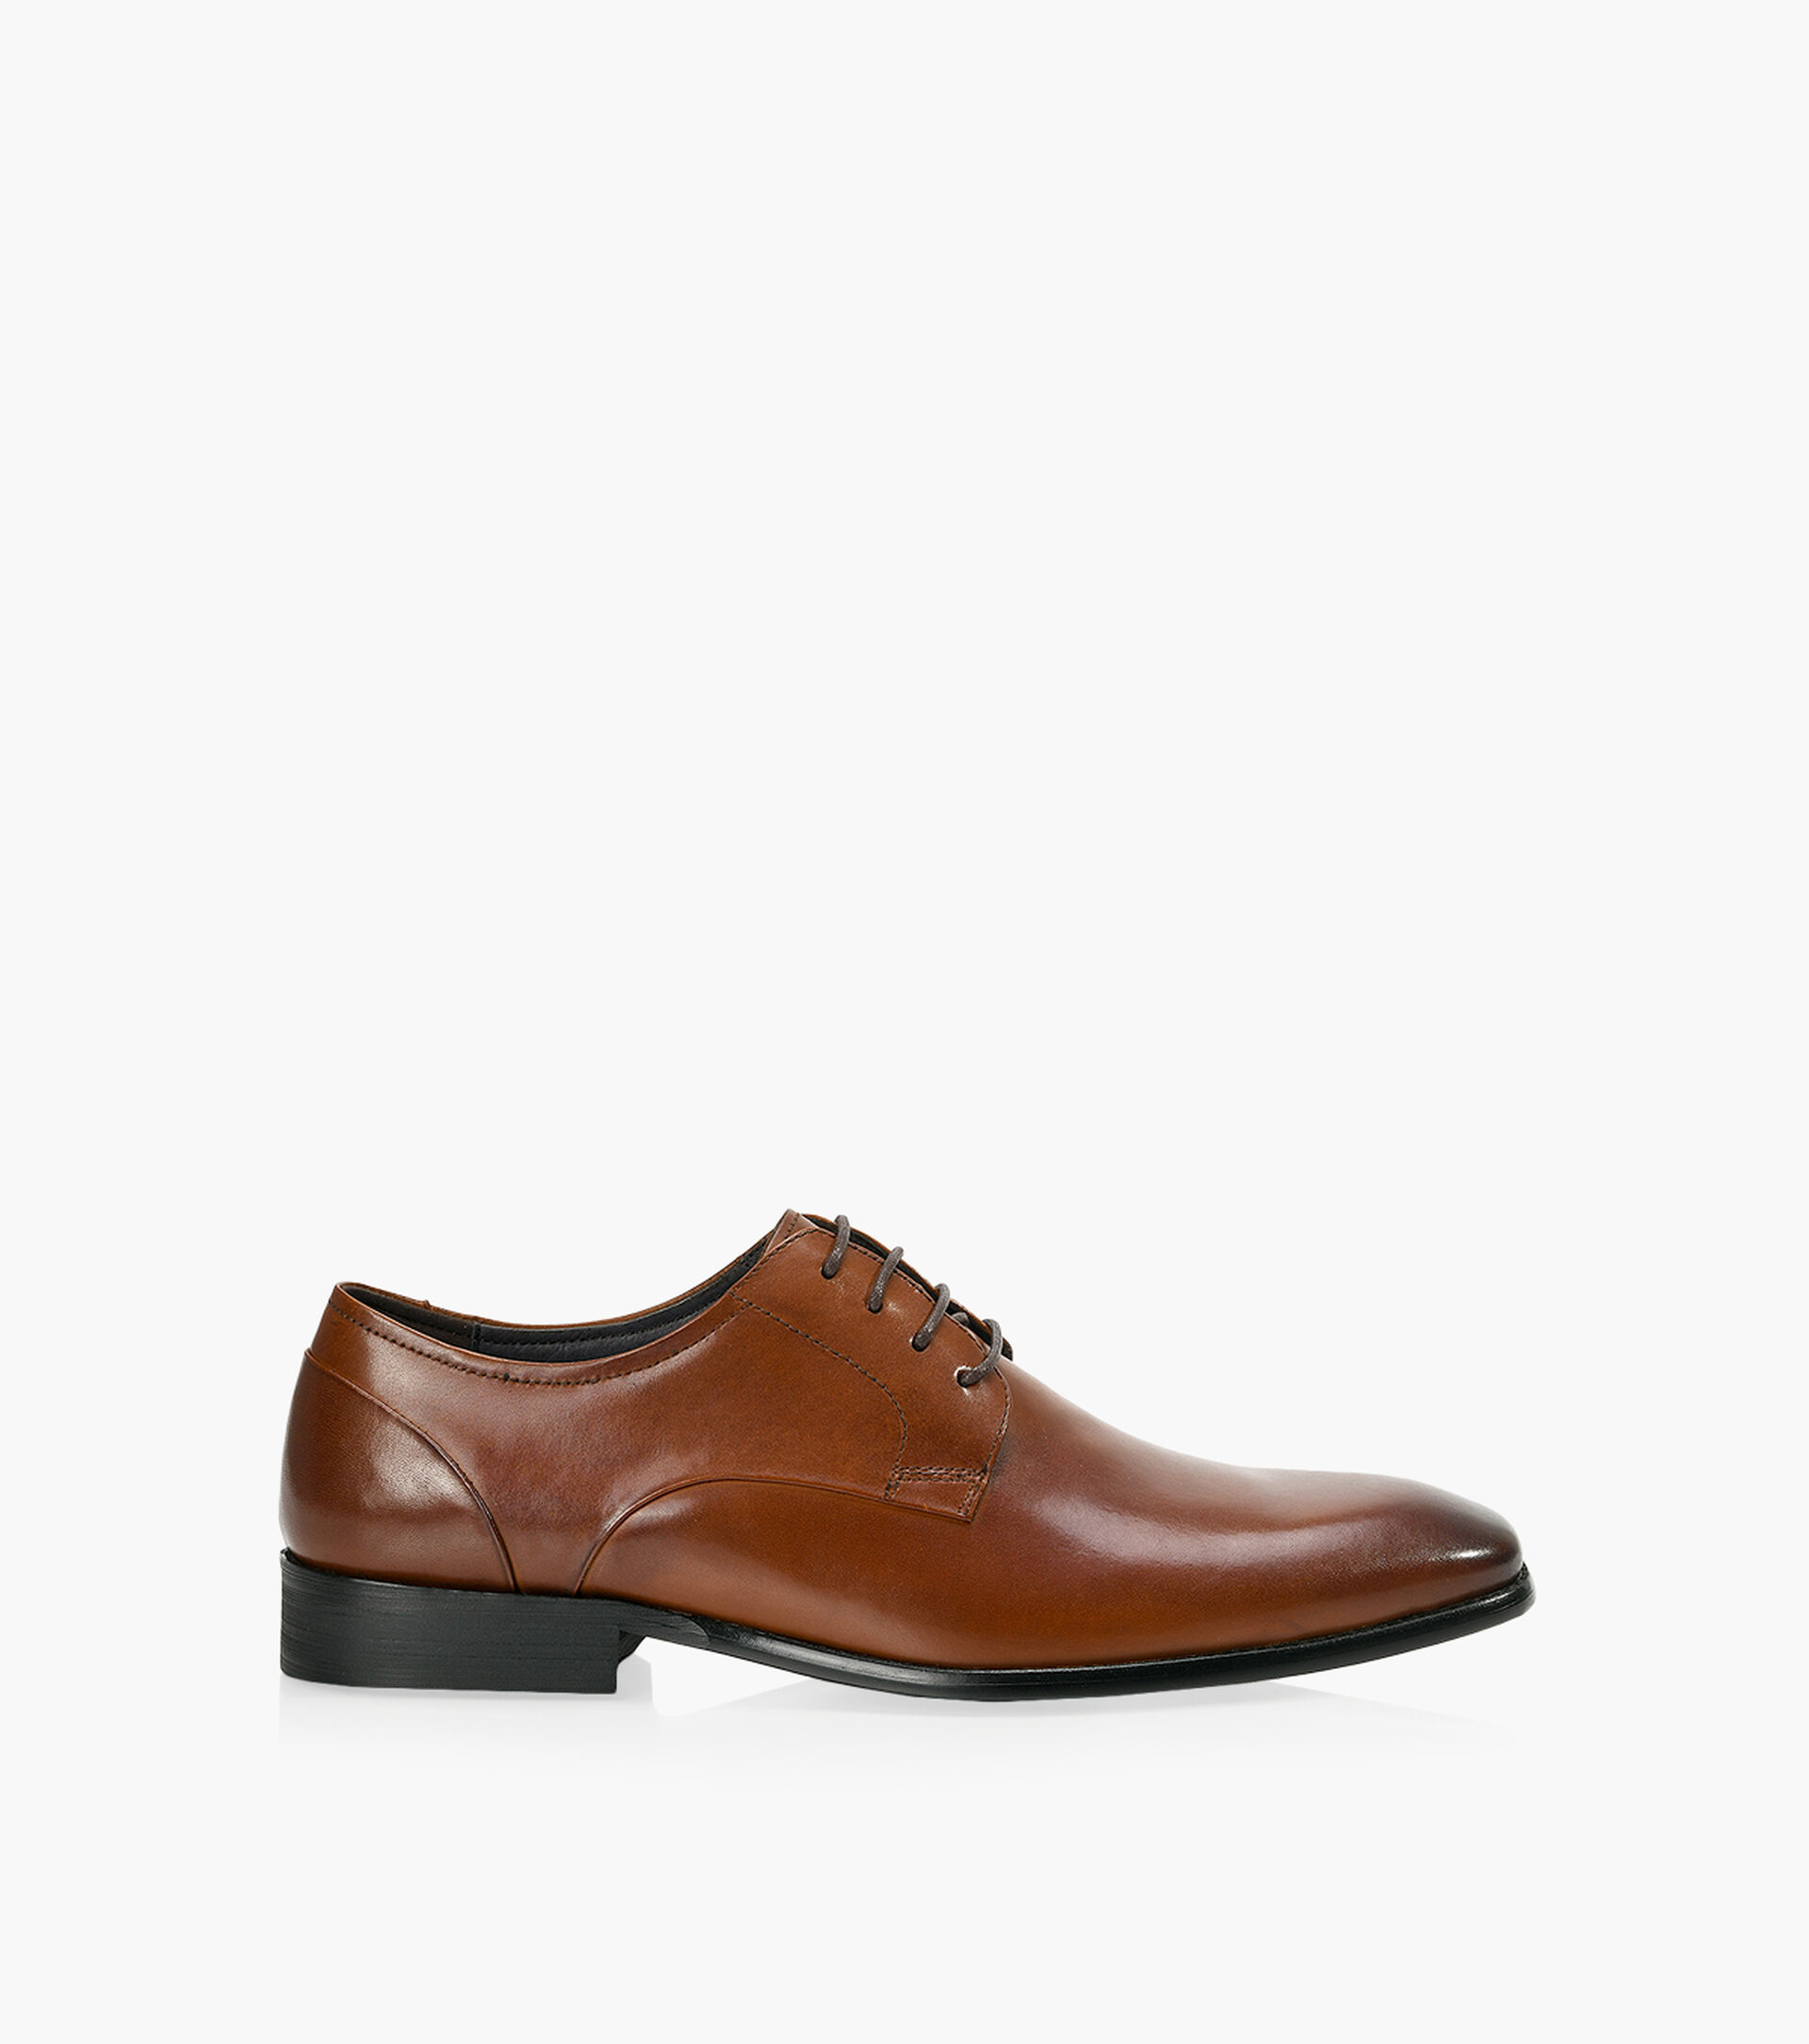 BROWNS BOWEN - Cuir | Browns Shoes